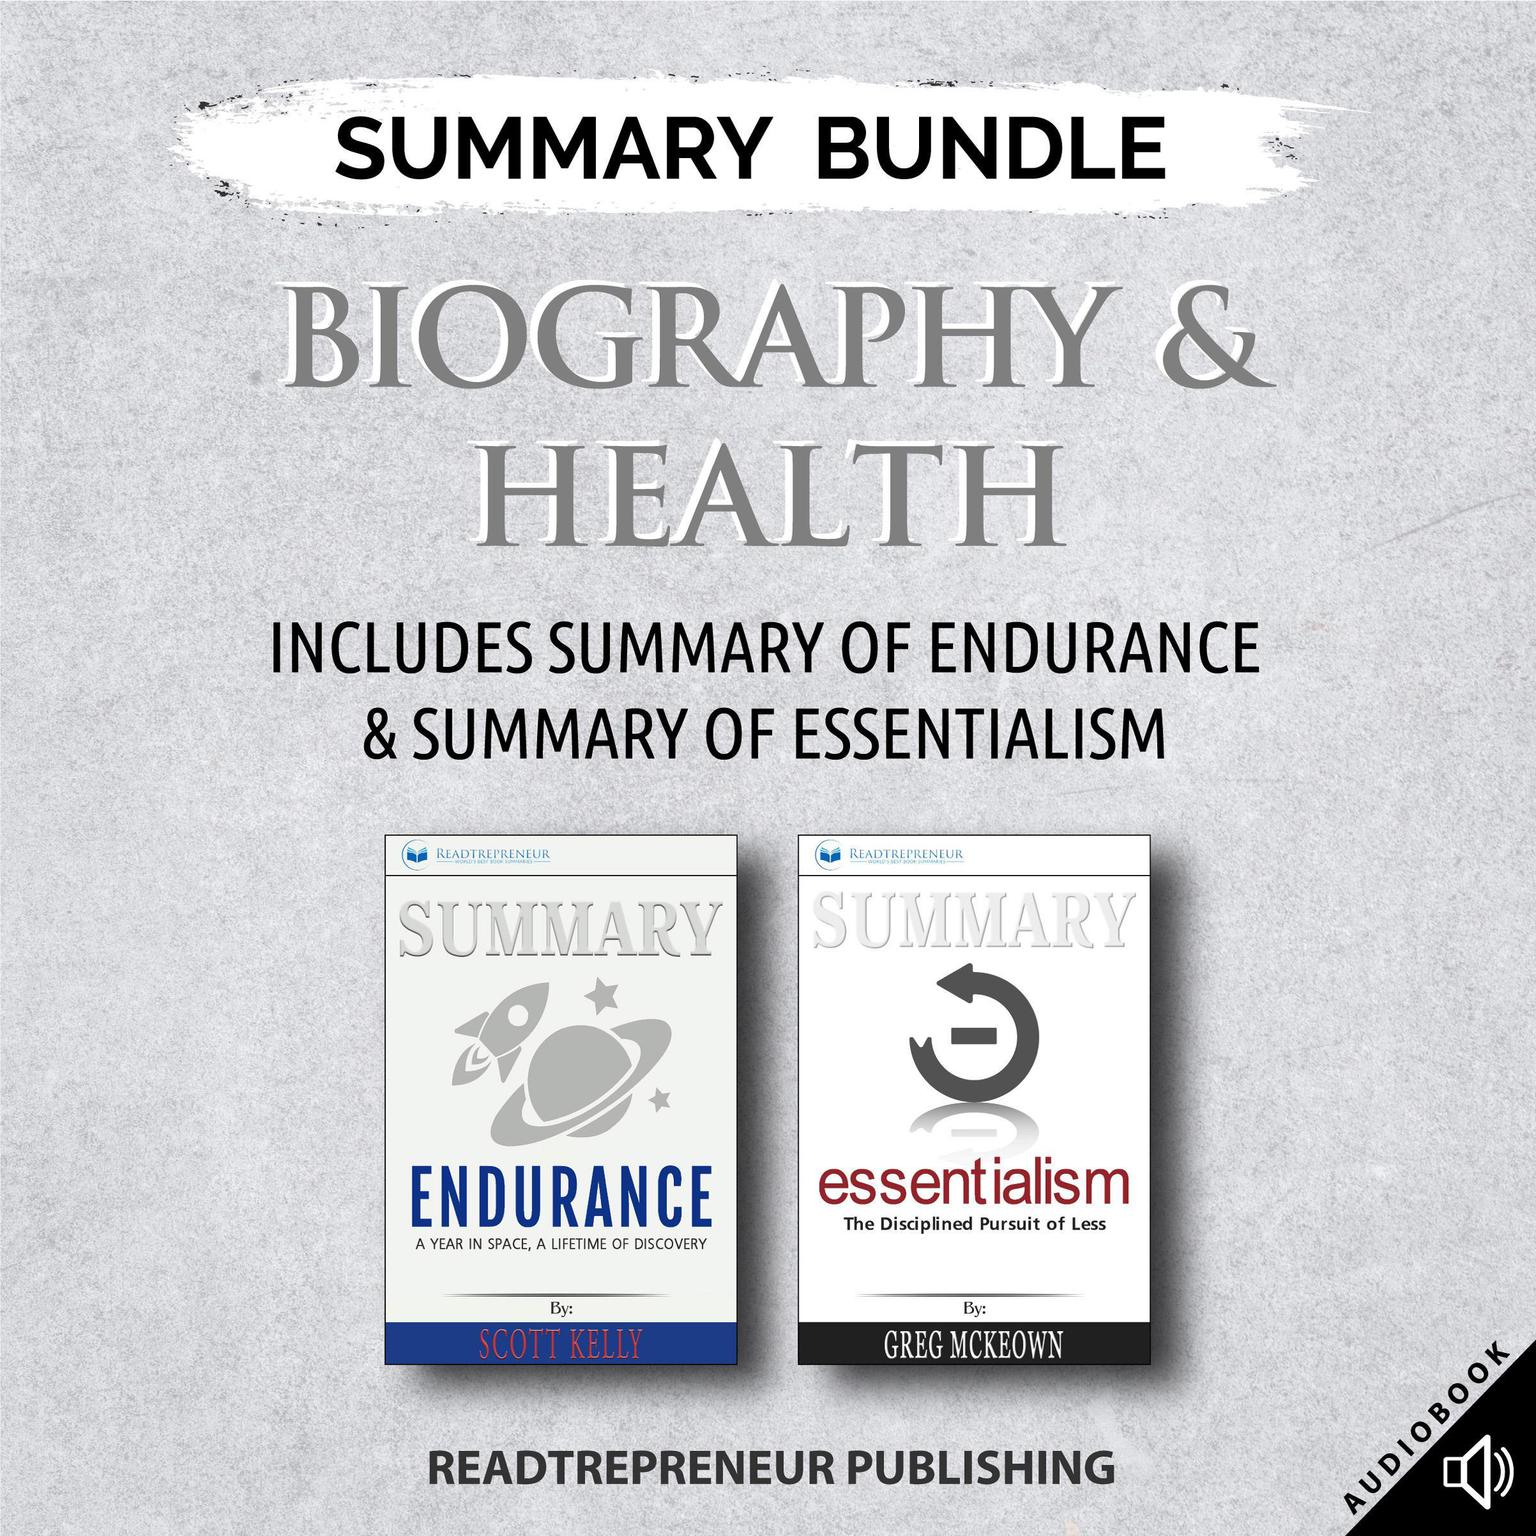 Summary Bundle: Biography & Health | Readtrepreneur Publishing: Includes Summary of Endurance & Summary of Essentialism Audiobook, by Readtrepreneur Publishing